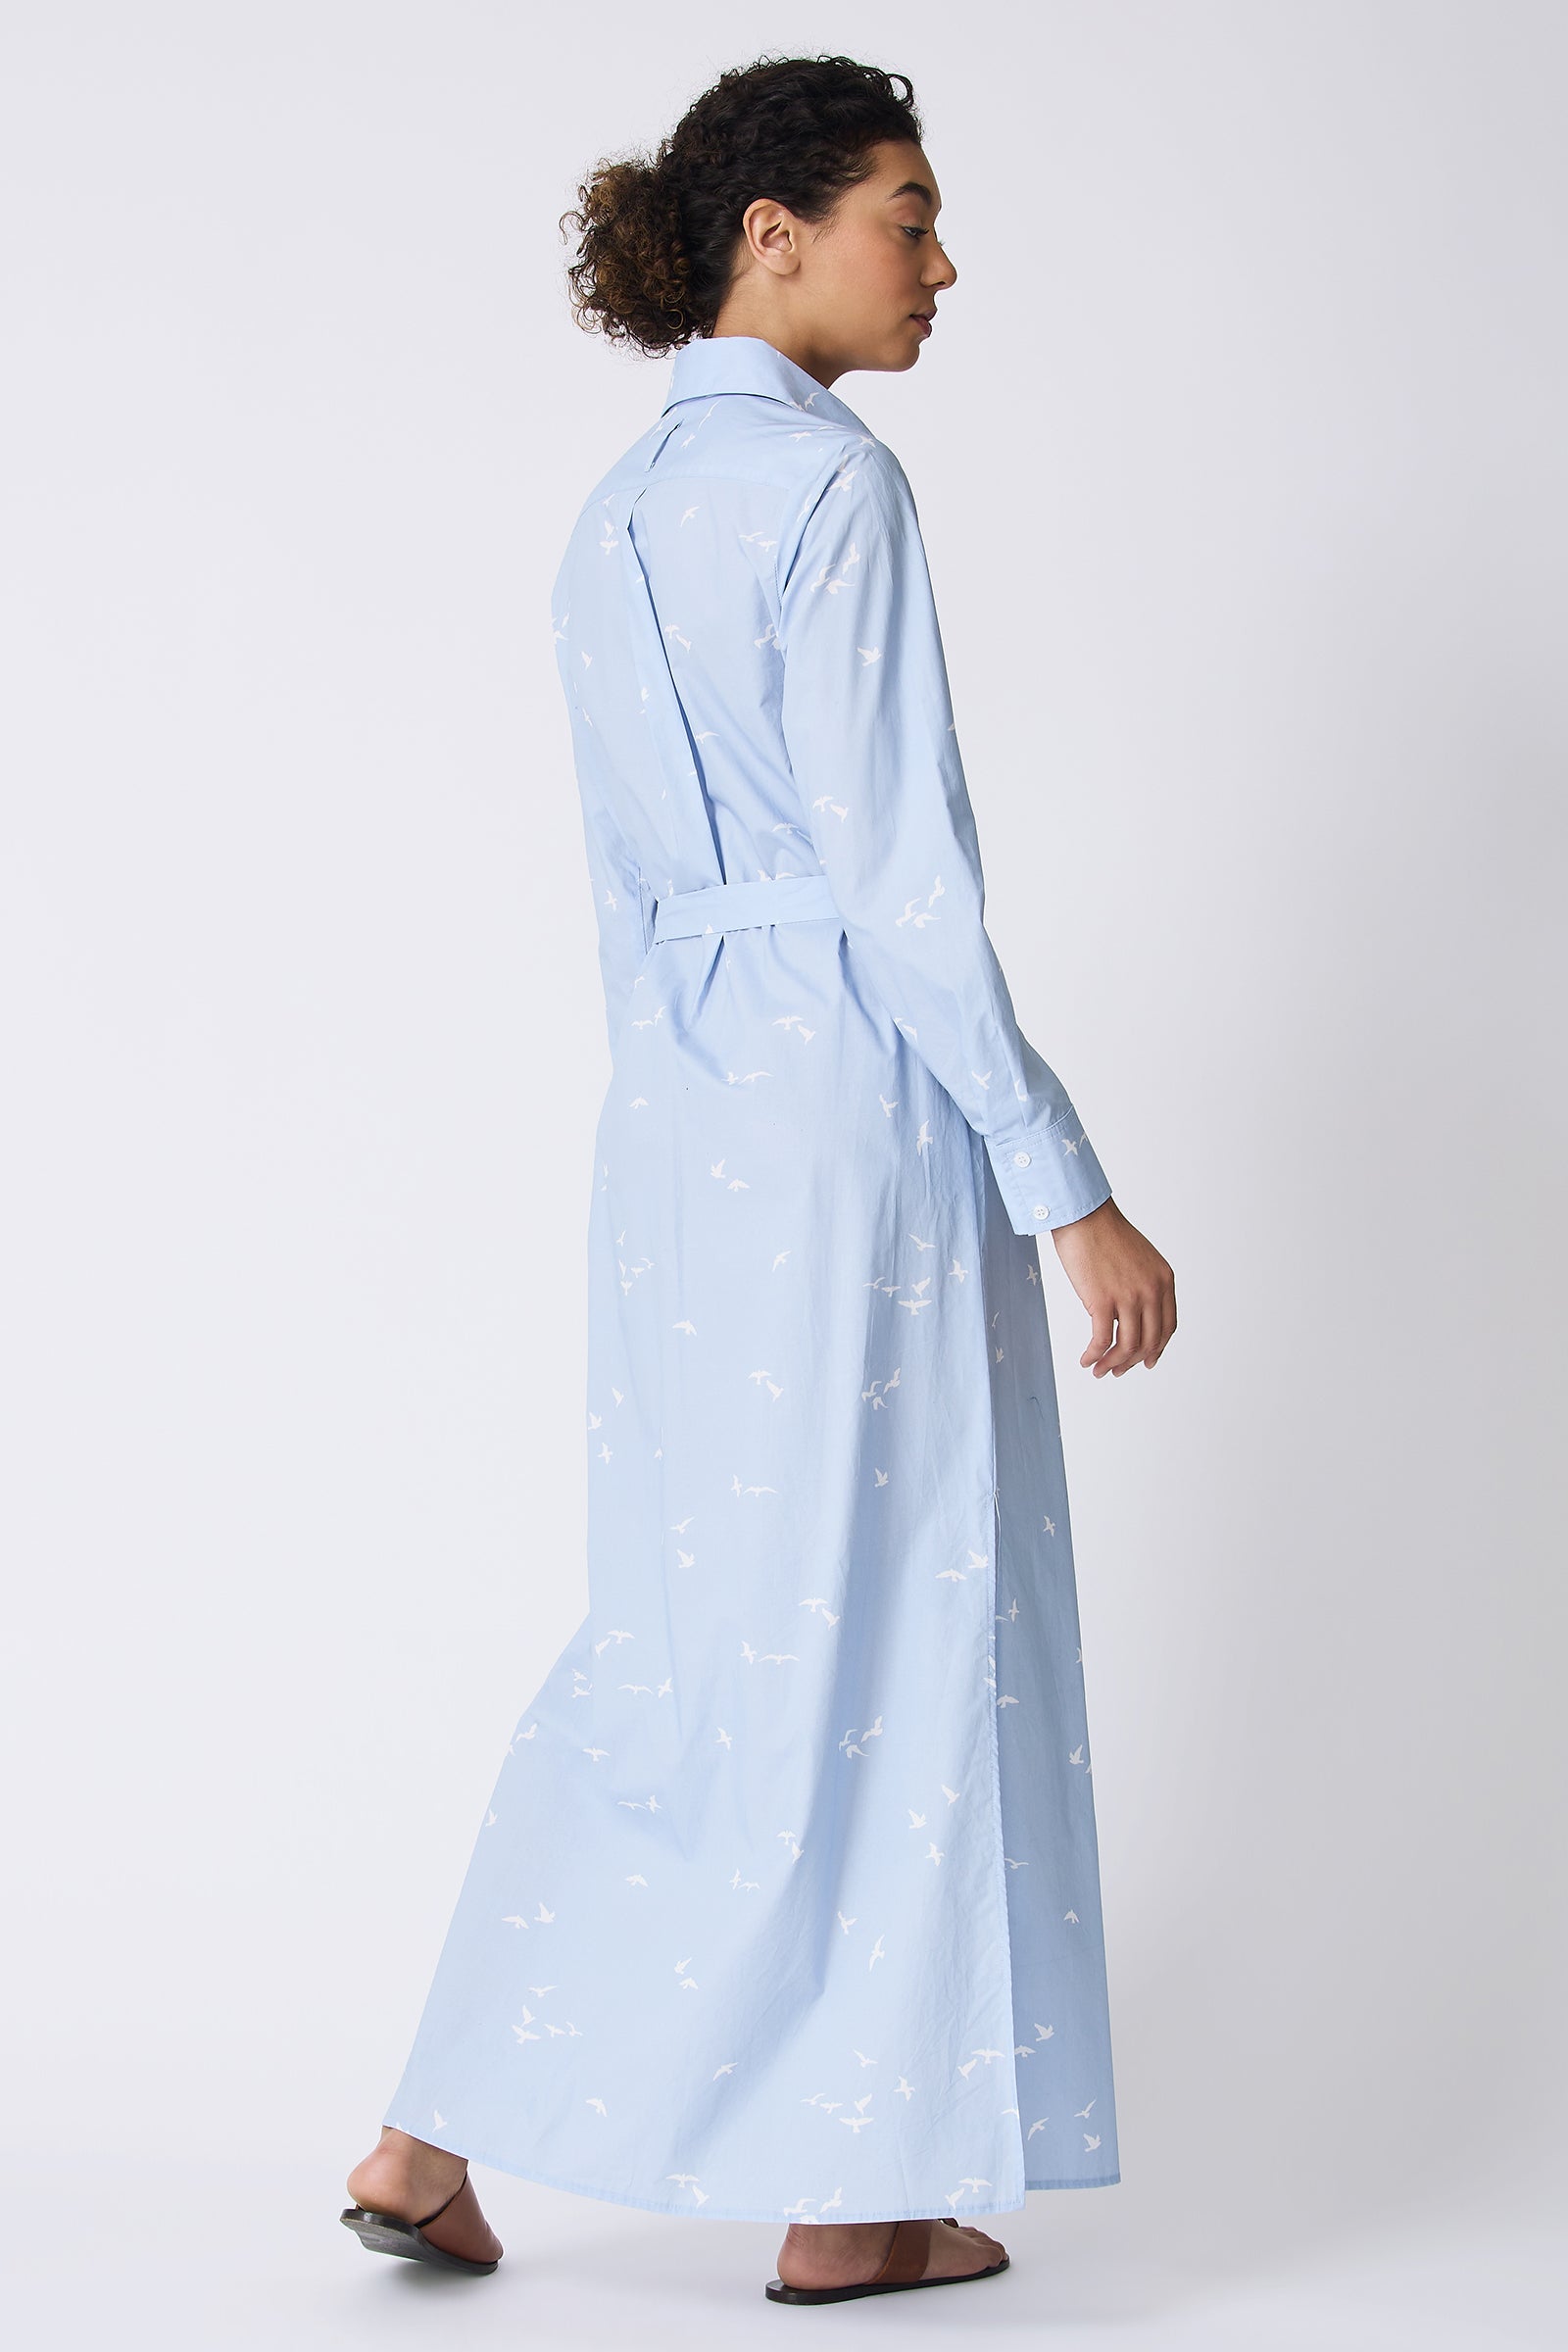 Kal Rieman June Maxi Dress in Oxford Blue Bird Print on model full front view